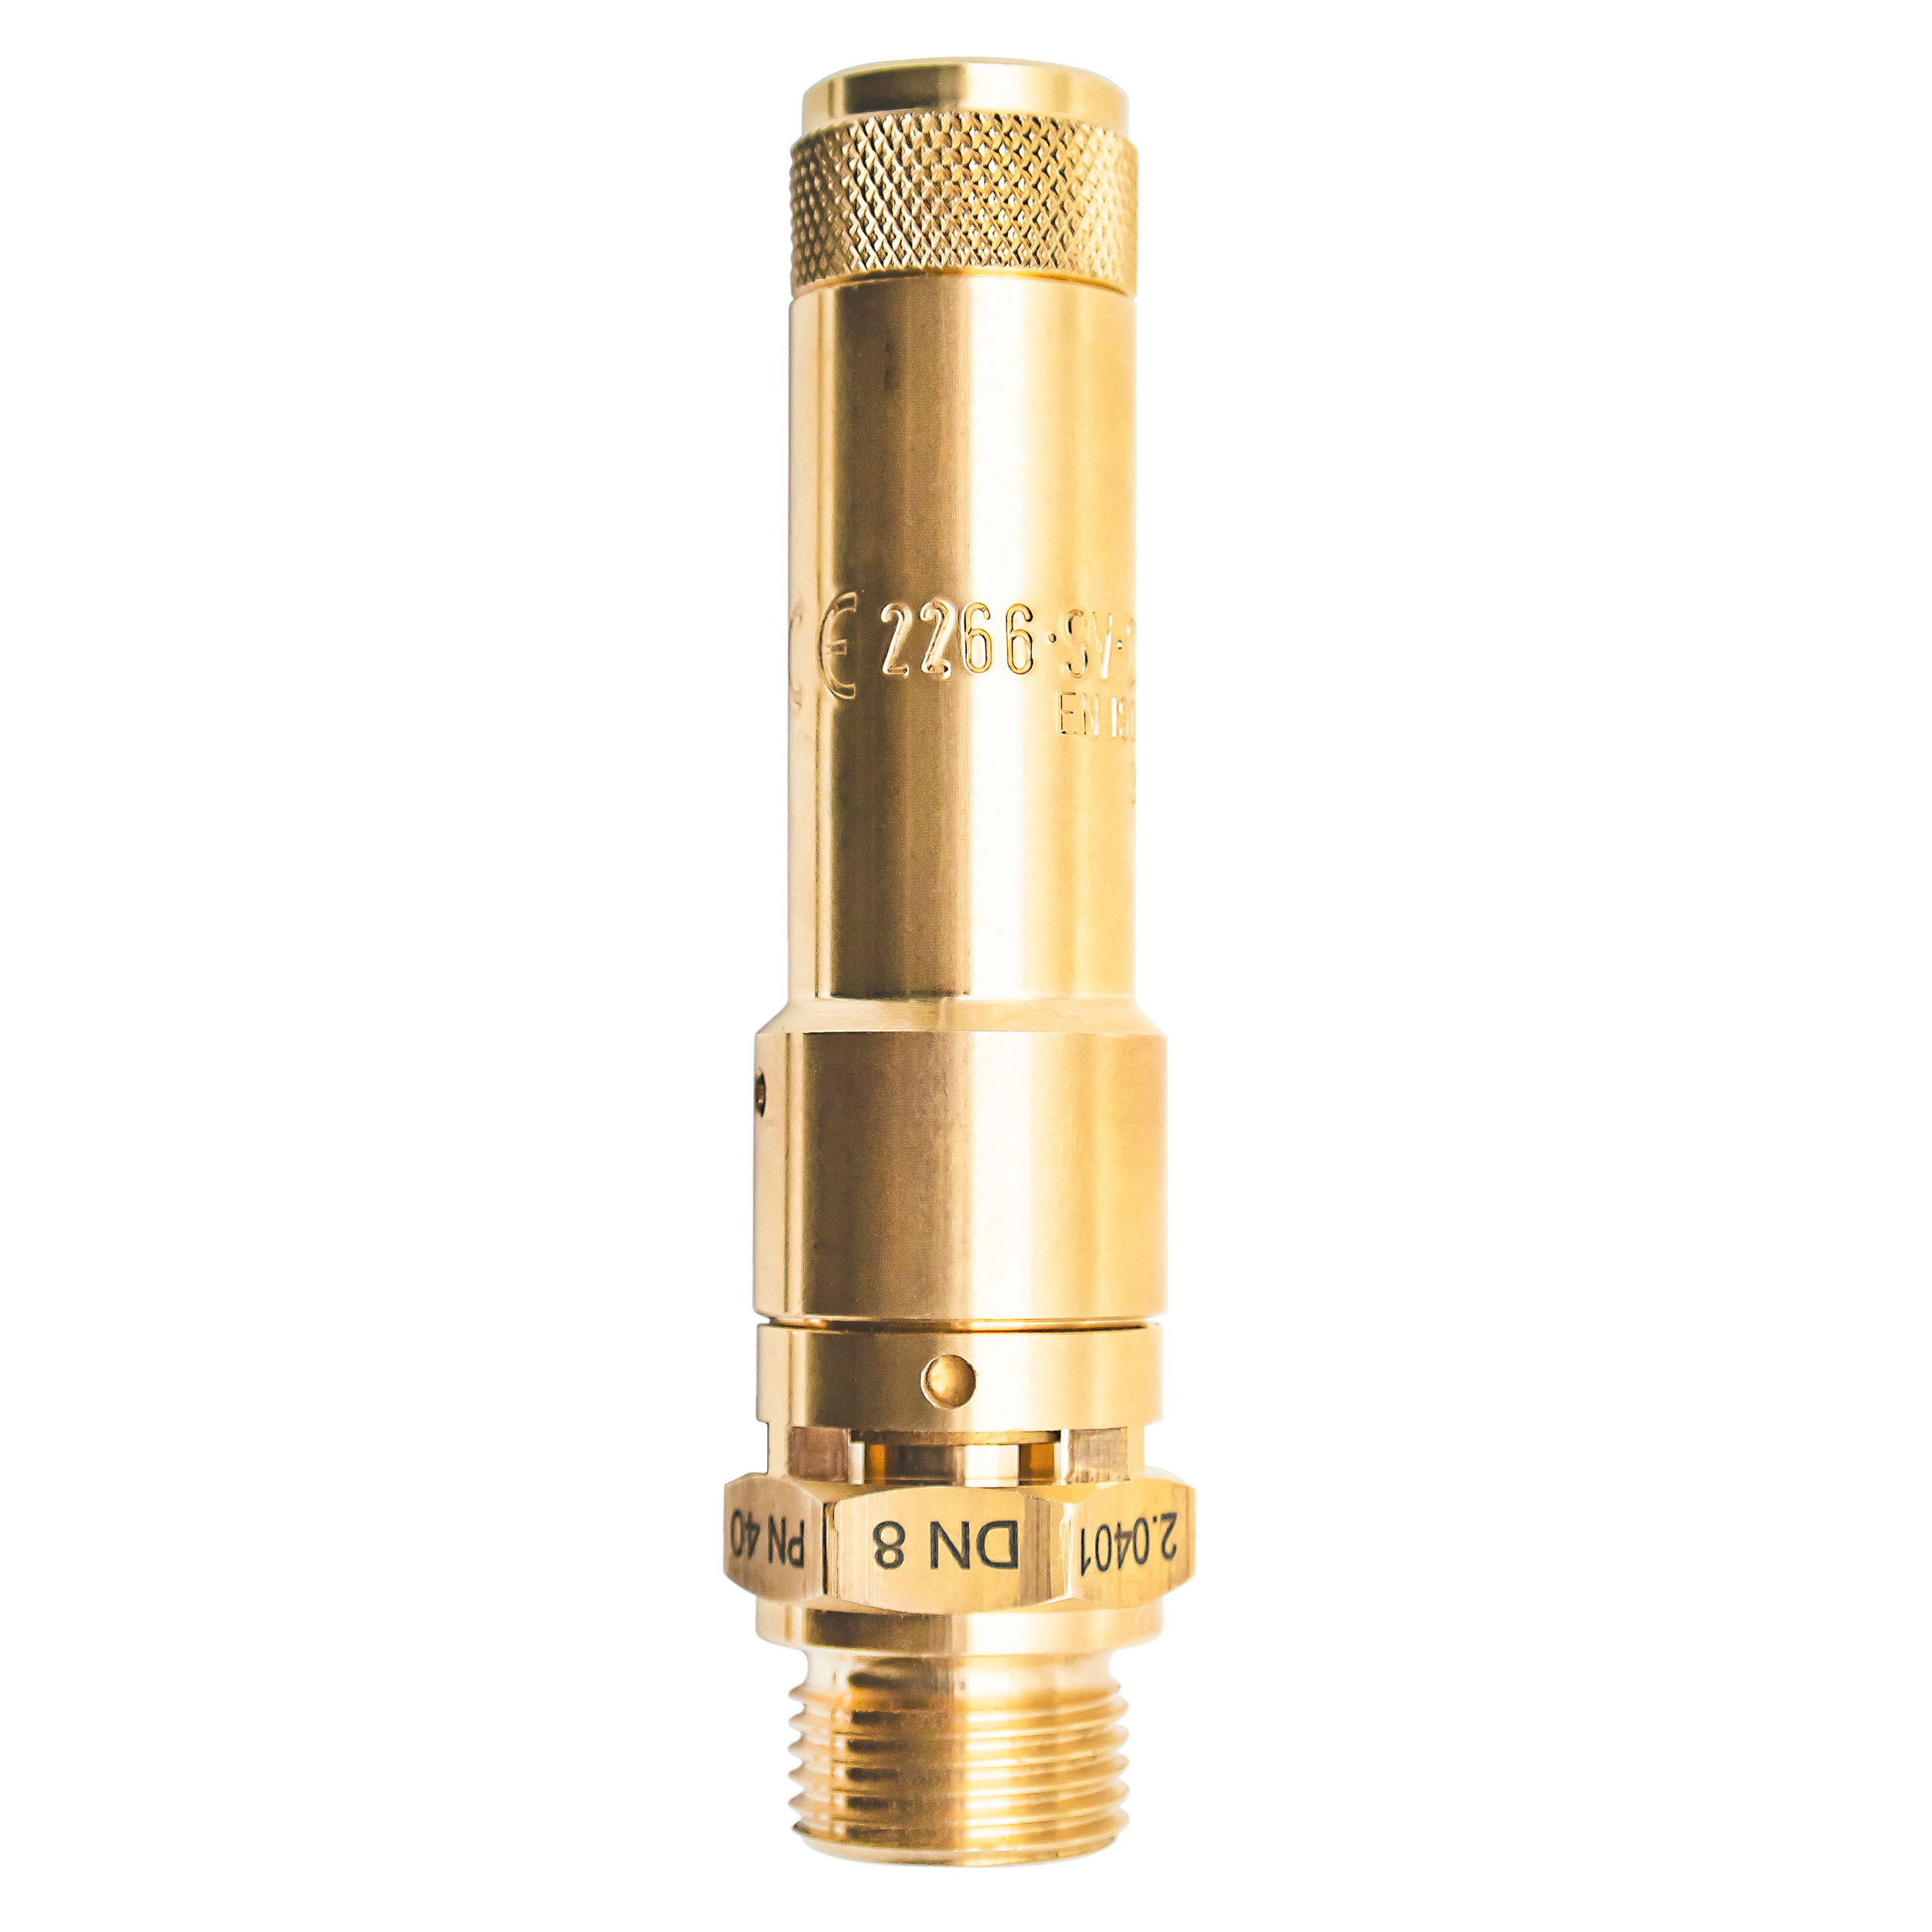 Savety valve component tested DN 8, G⅜, set pressure: 8.1 bar (117,45 psi)